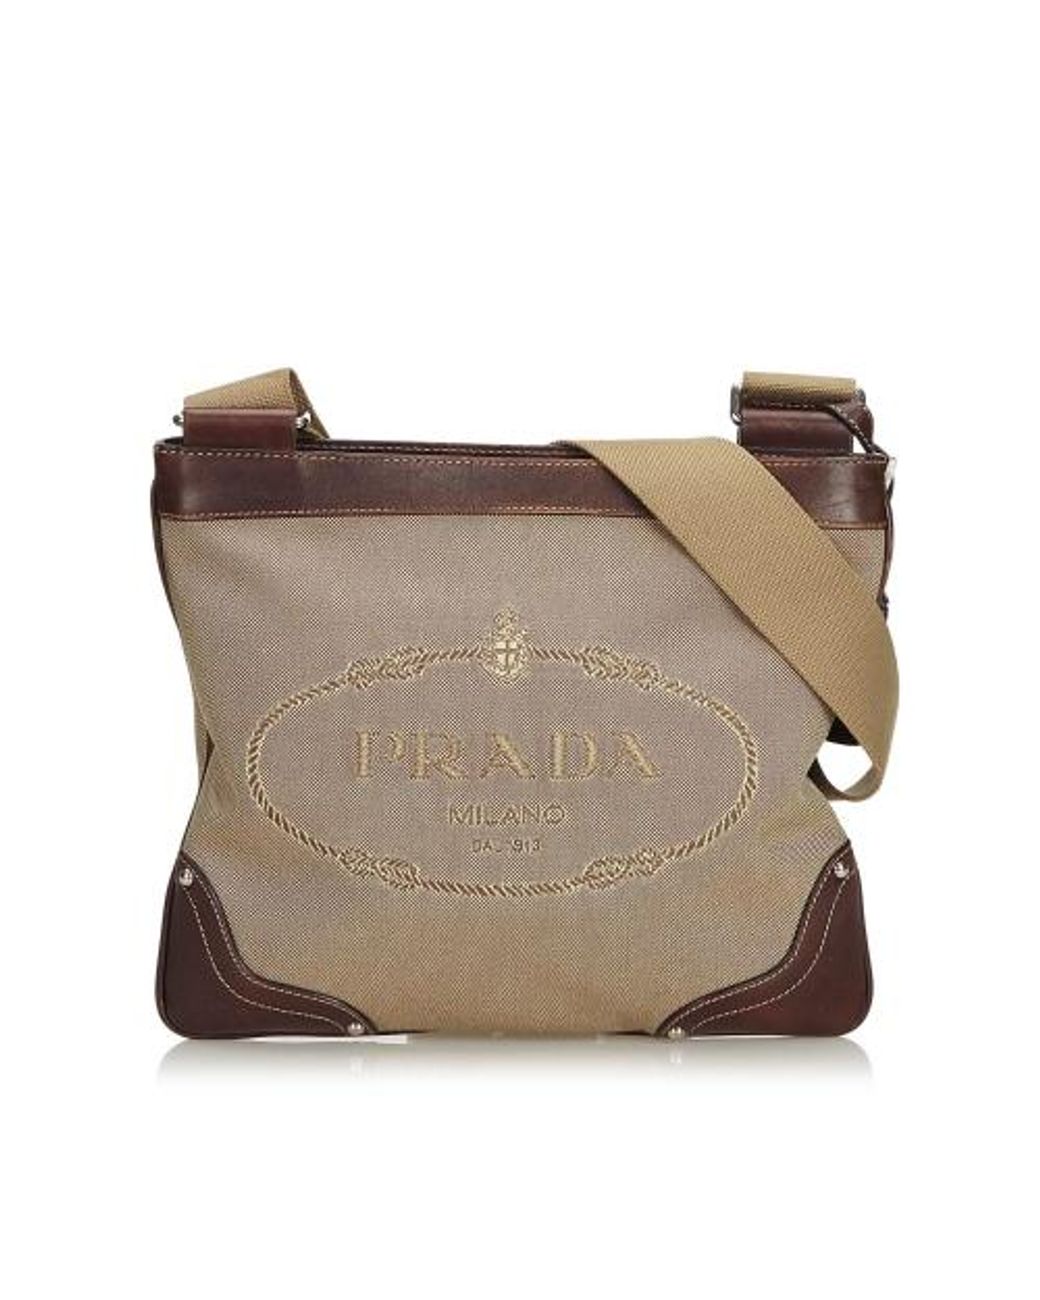 Prada, Bags, Vintage Prada Milano Dal 913 Handbag